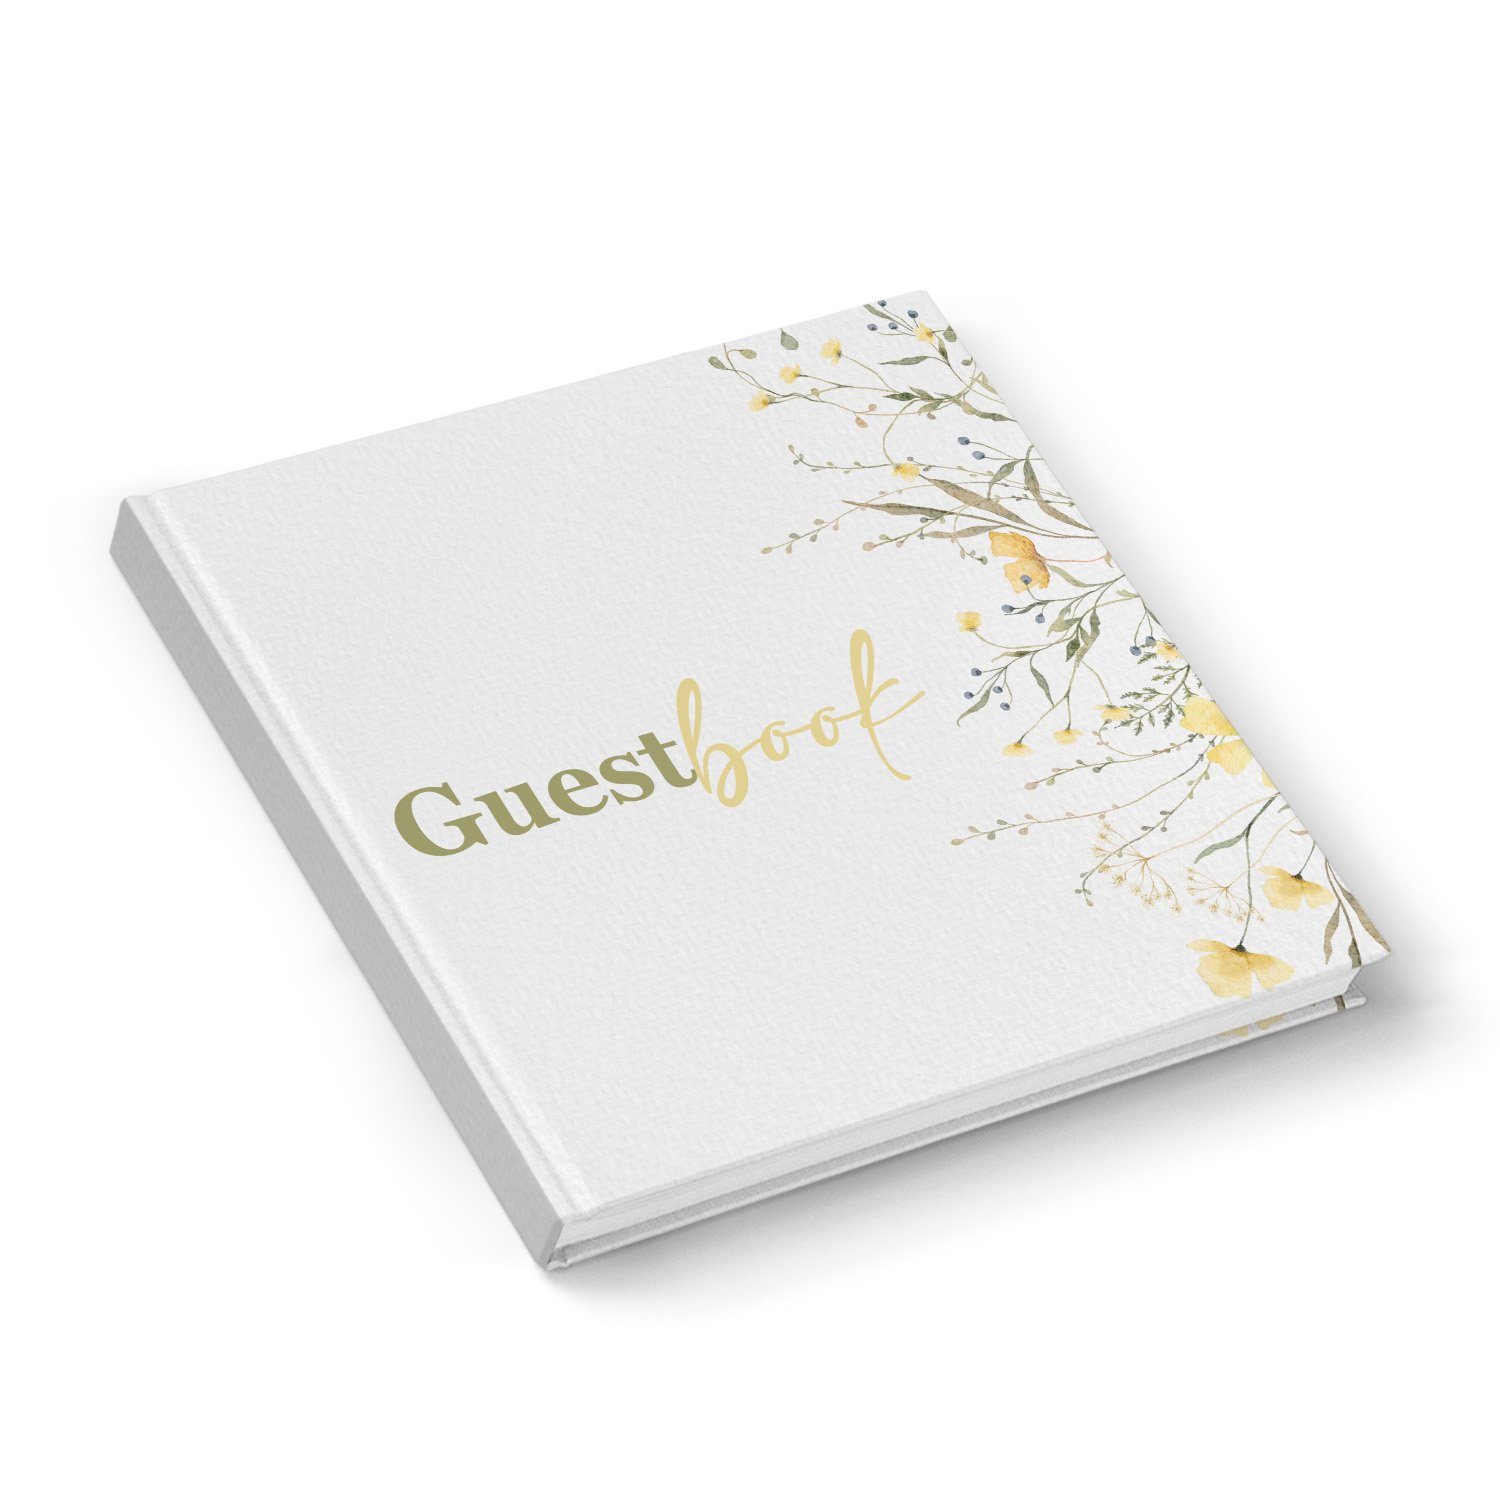 Logbuch-Verlag Tagebuch Kleines Gästebuch Guestbook 18 x 18 cm floral